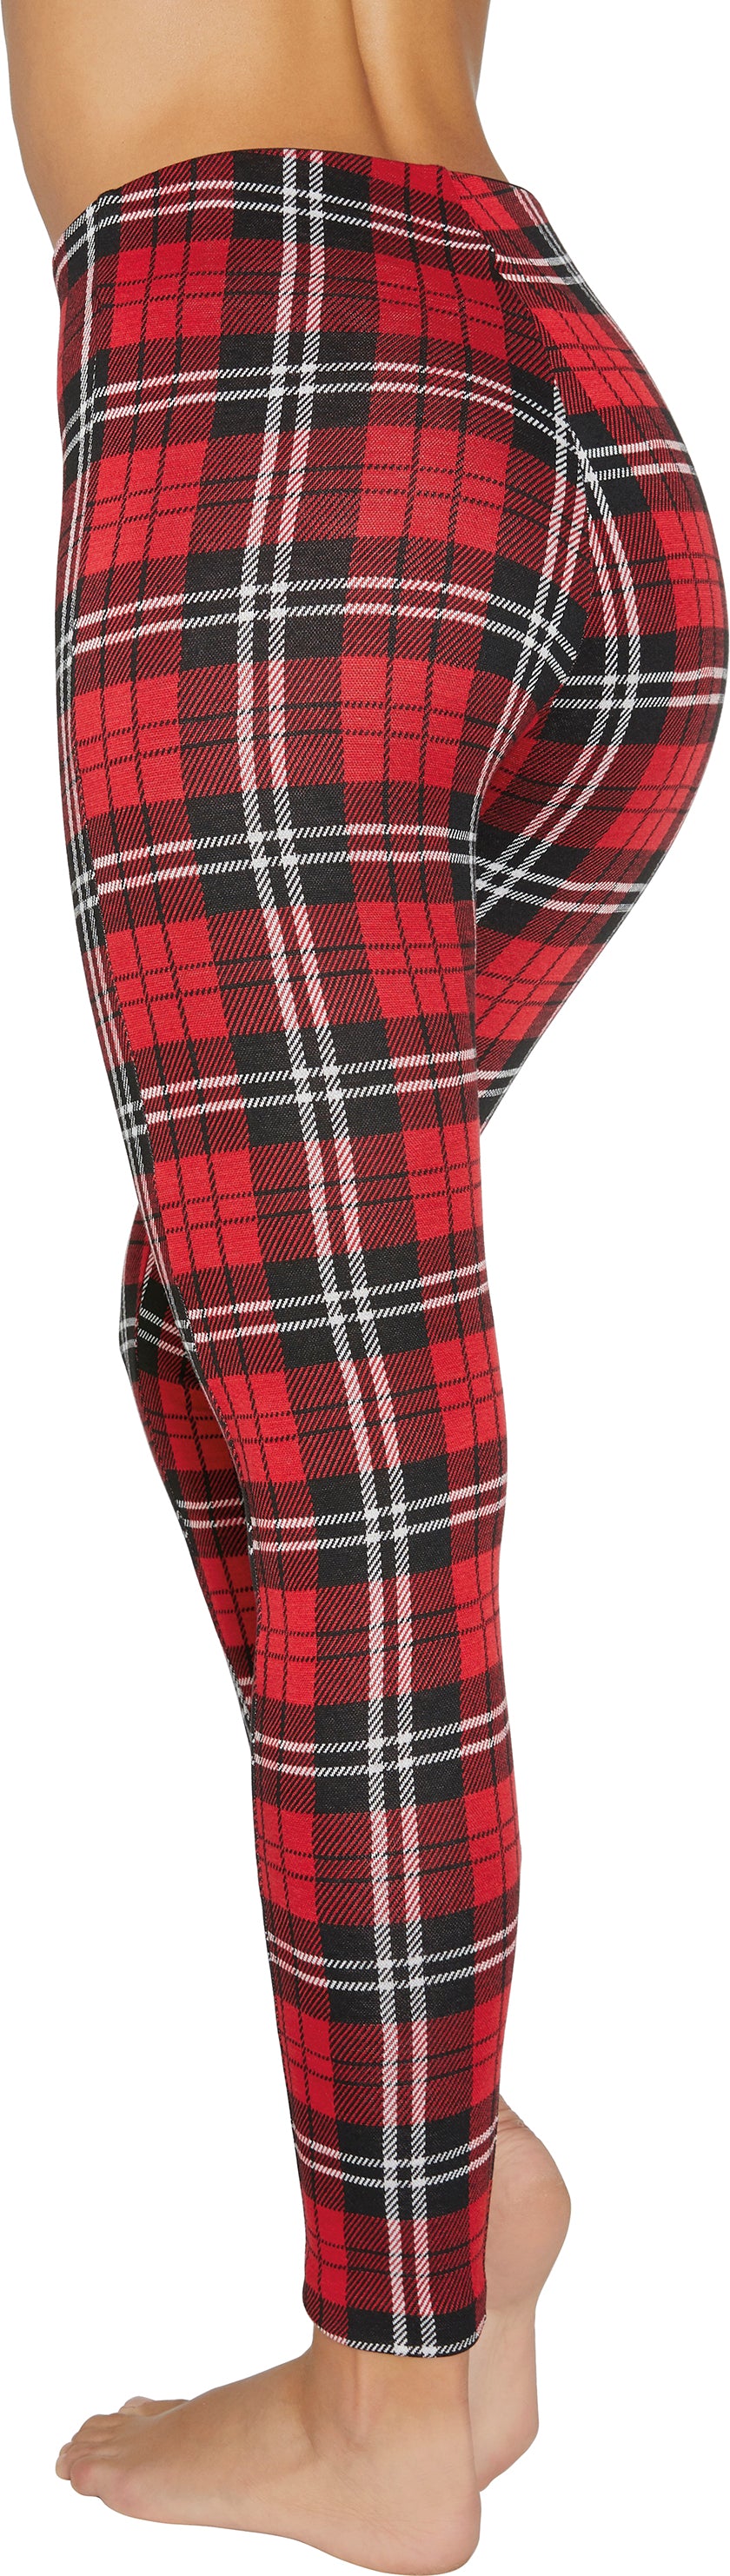 Ysabel Mora 70257 Tartan Treggings - Skinny classic red tartan stretch trouser leggings with high waist and front zip.